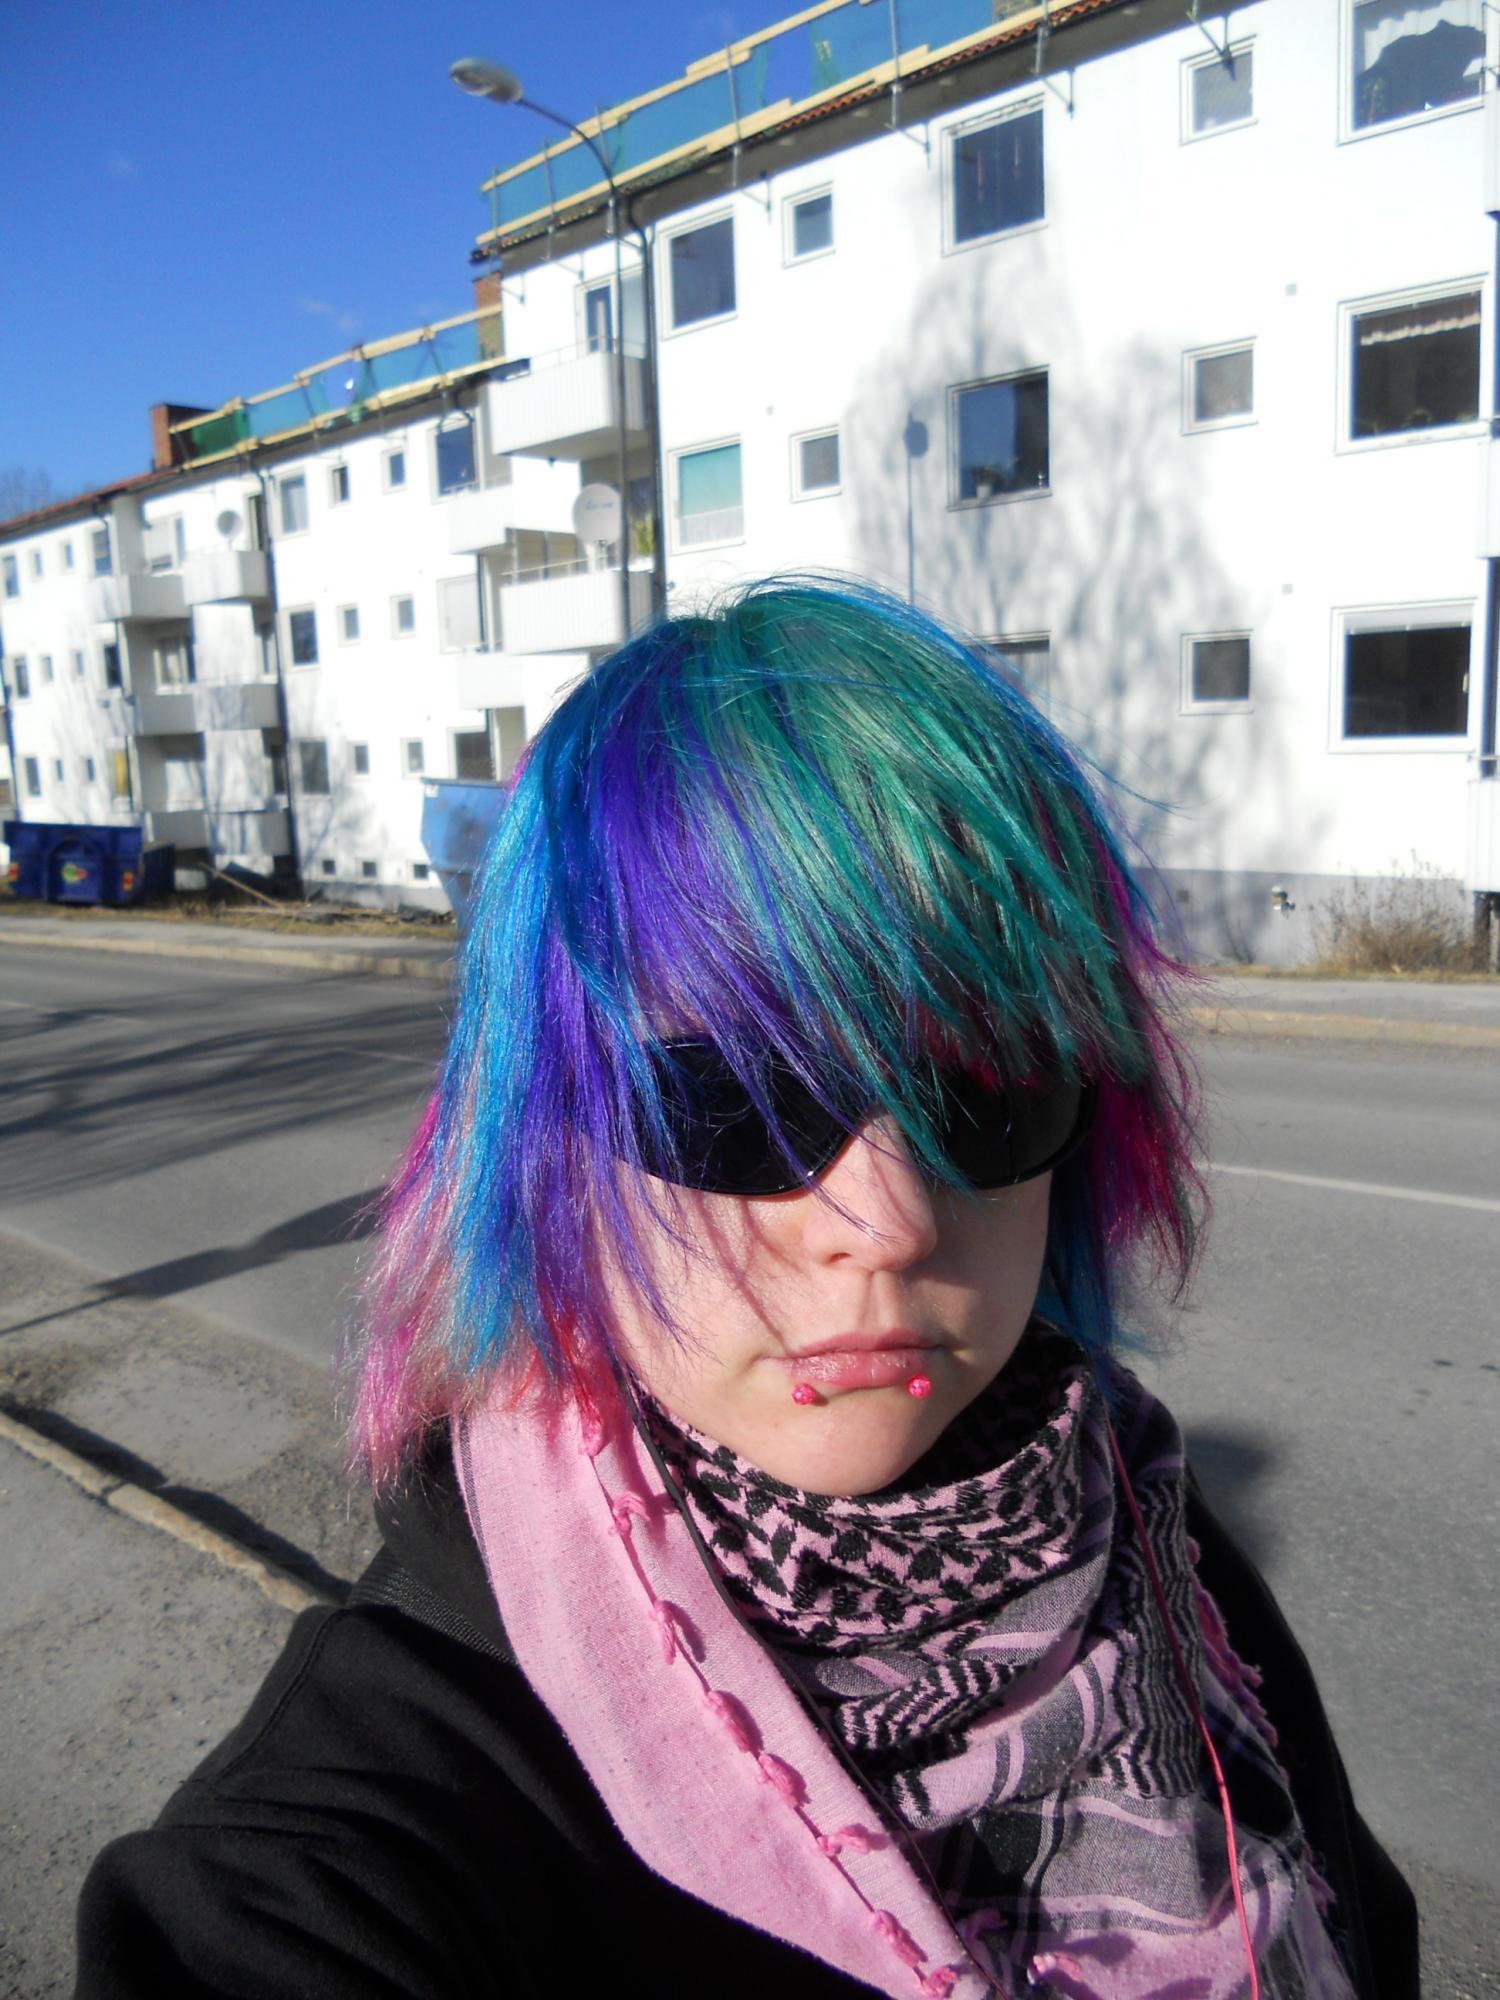 Last spring (2012) I had multicolored hair.